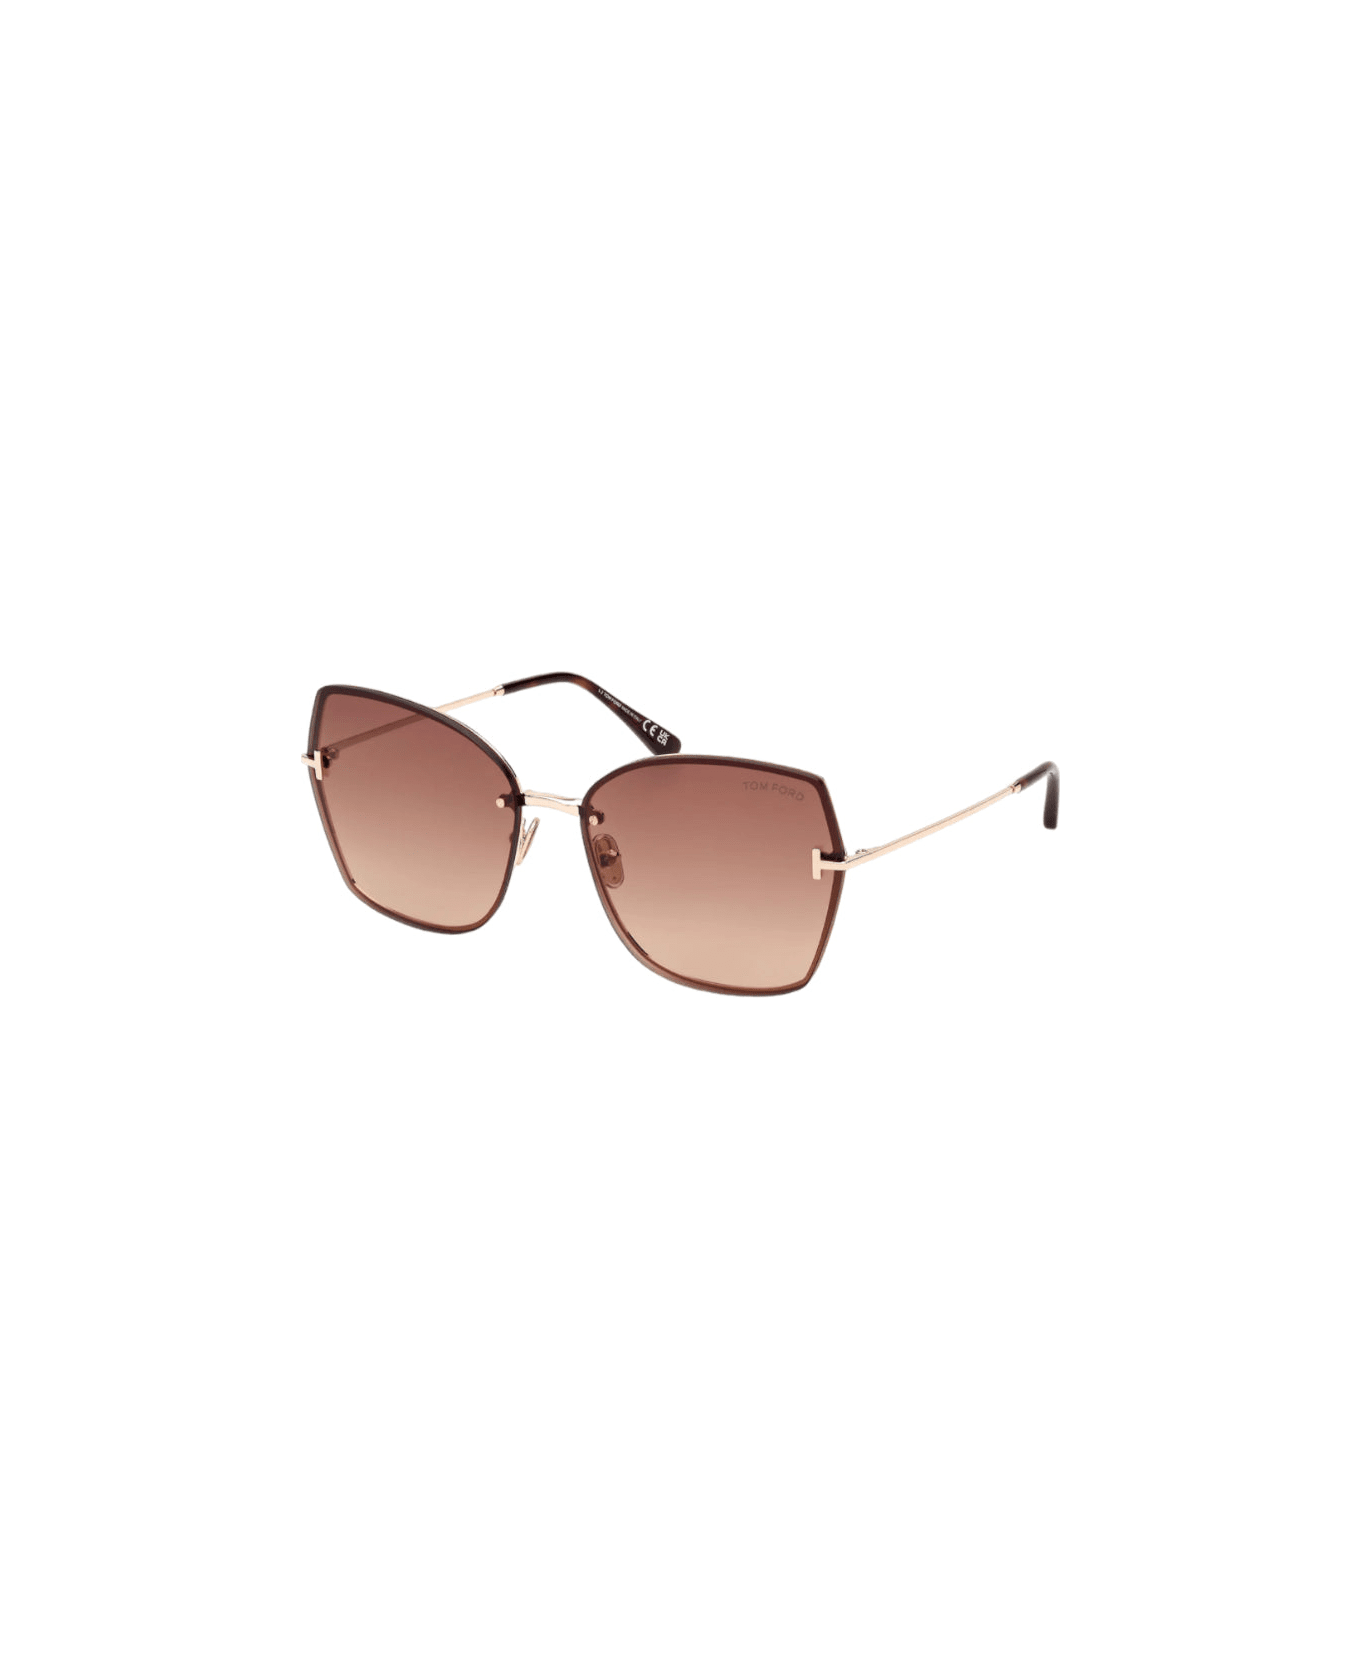 Tom Ford Eyewear Nickie - Ft 1107 /s Sunglasses